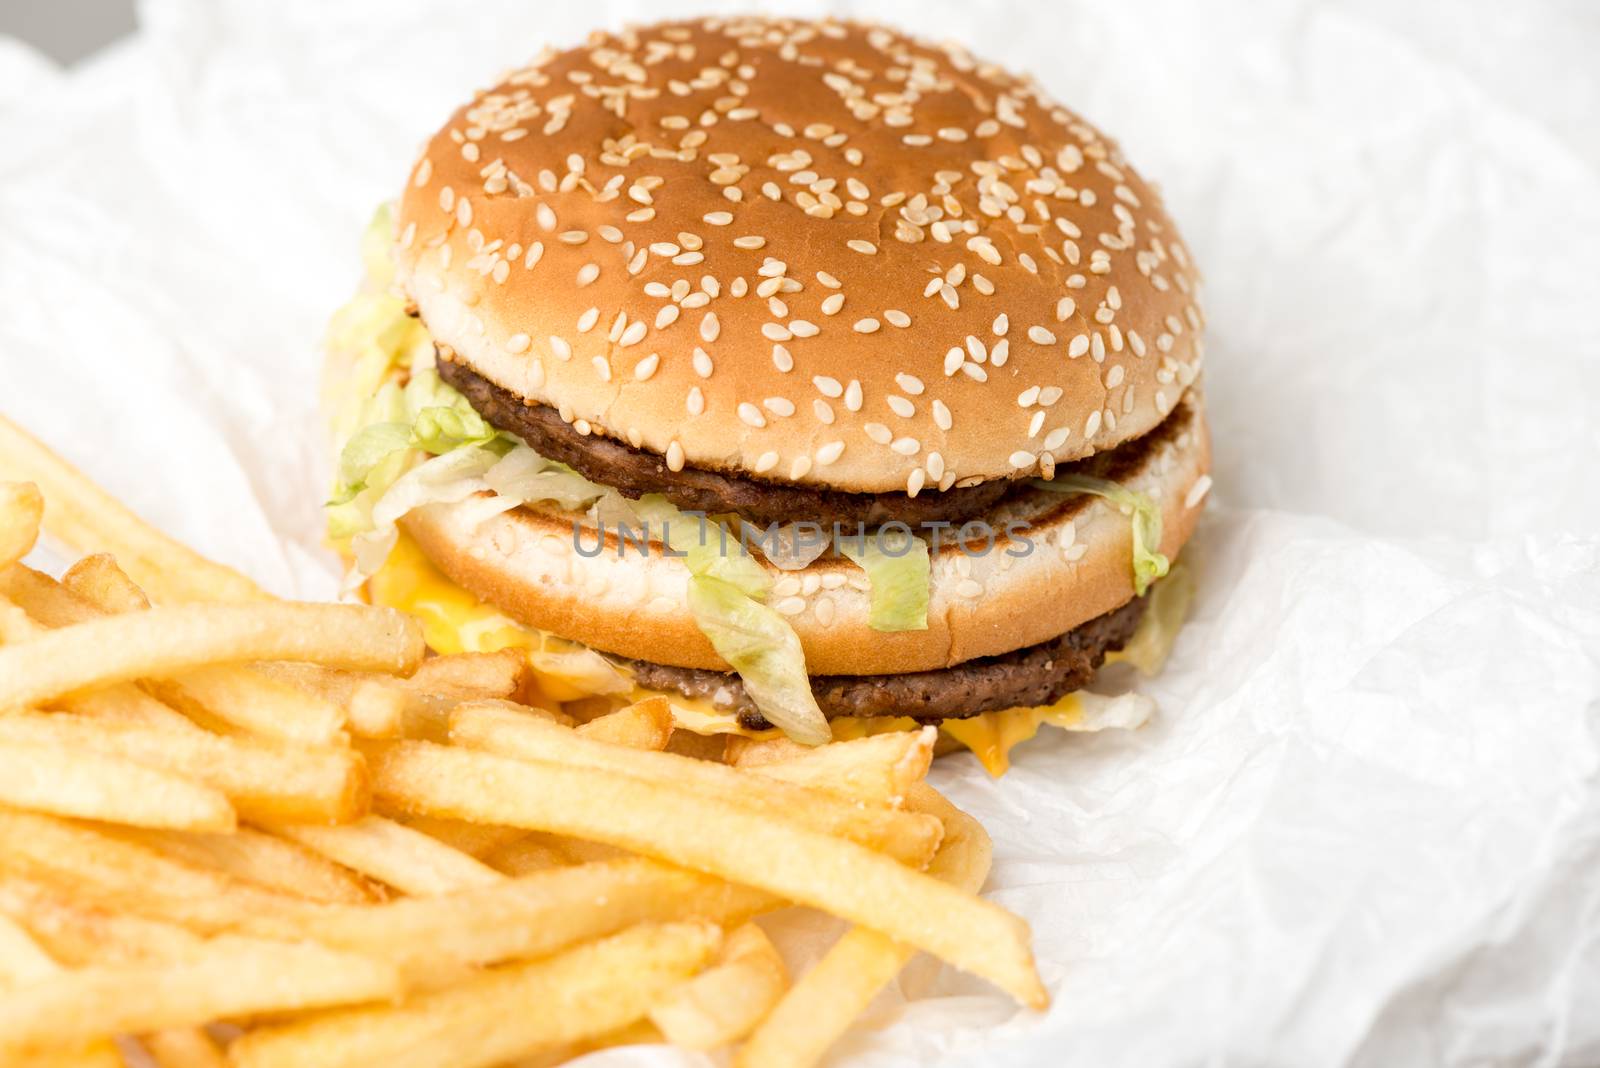 Double burger from McDonalds by Nanisimova